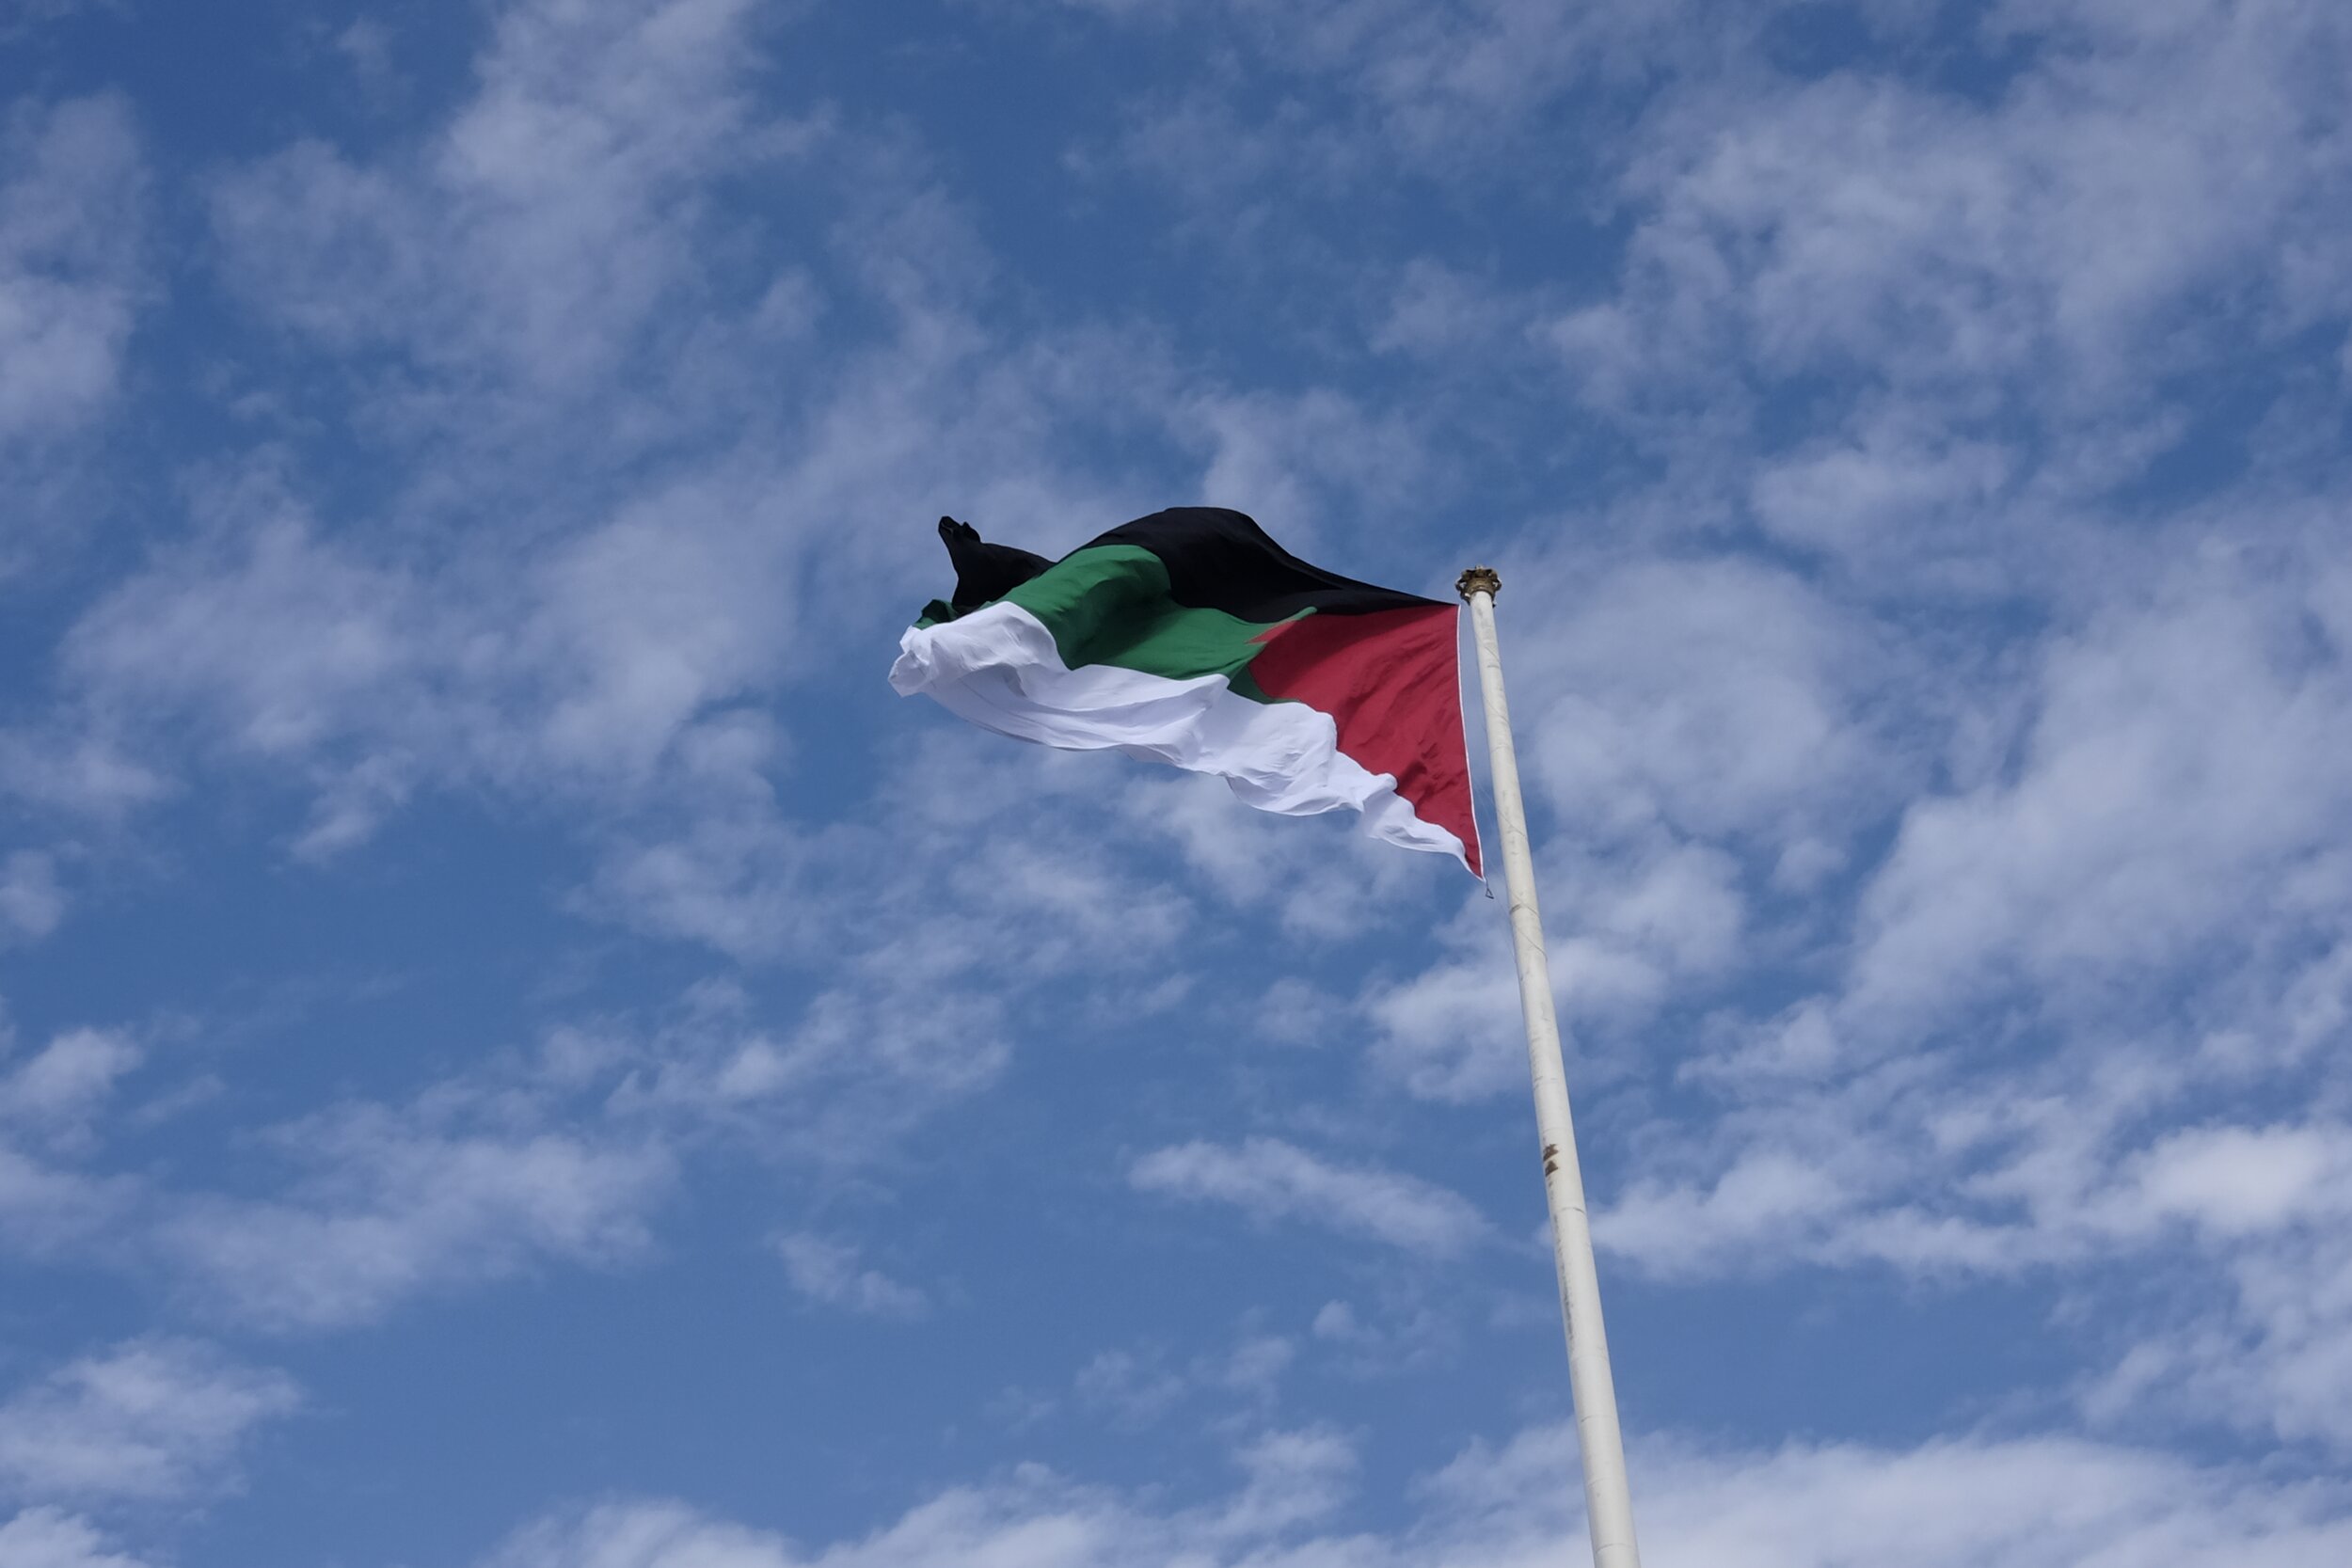 jordanian-flag-in-the-wind_t20_lRaLrg.jpg